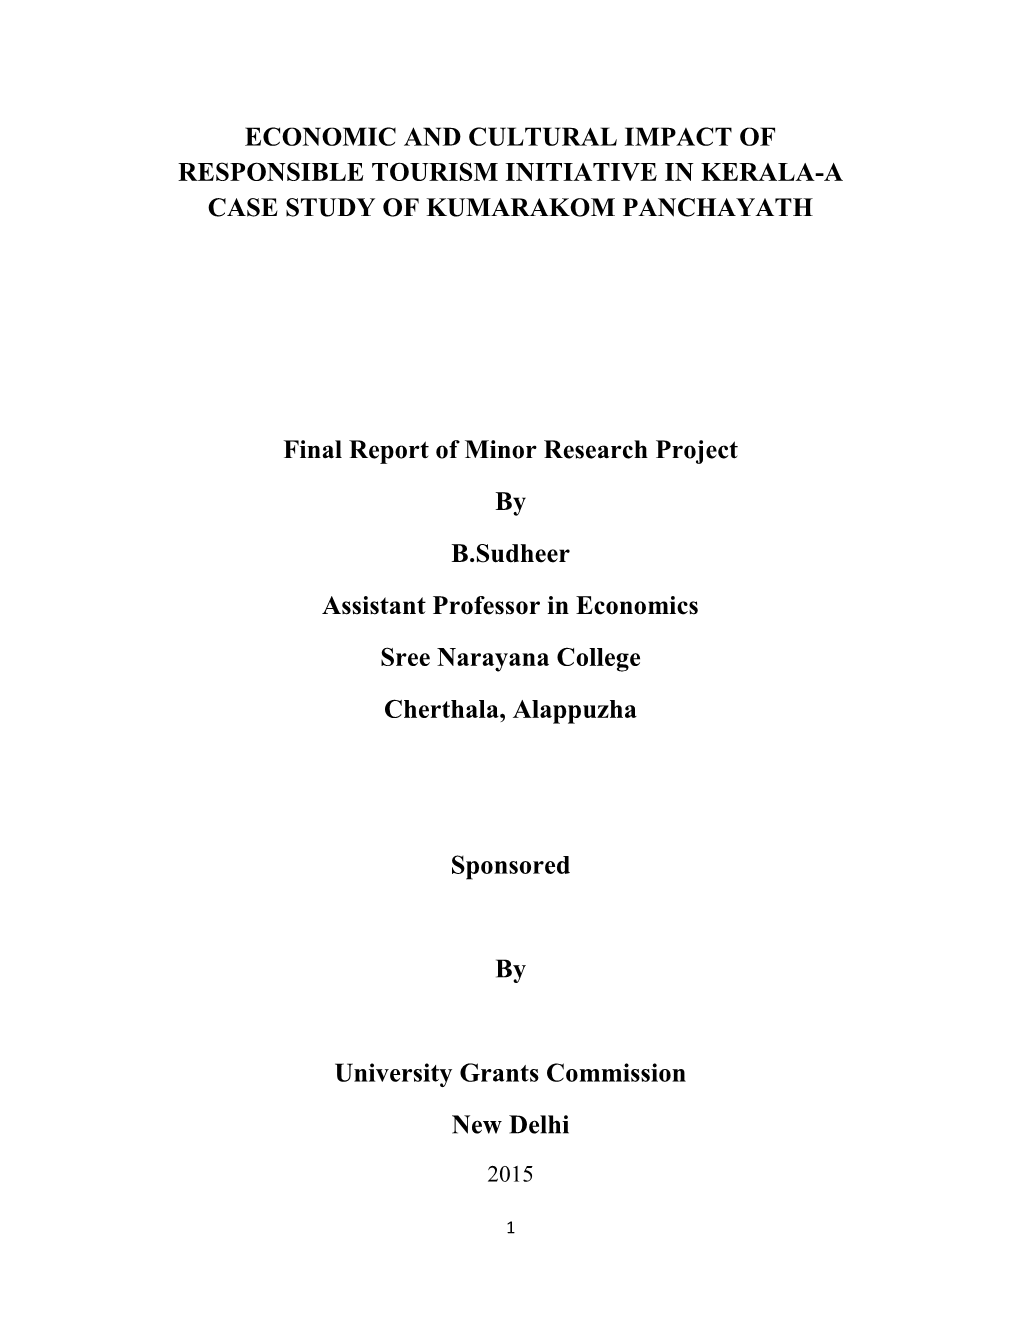 Economic and Cultural Impact of Responsible Tourism Initiative in Kerala-A Case Study of Kumarakom Panchayath